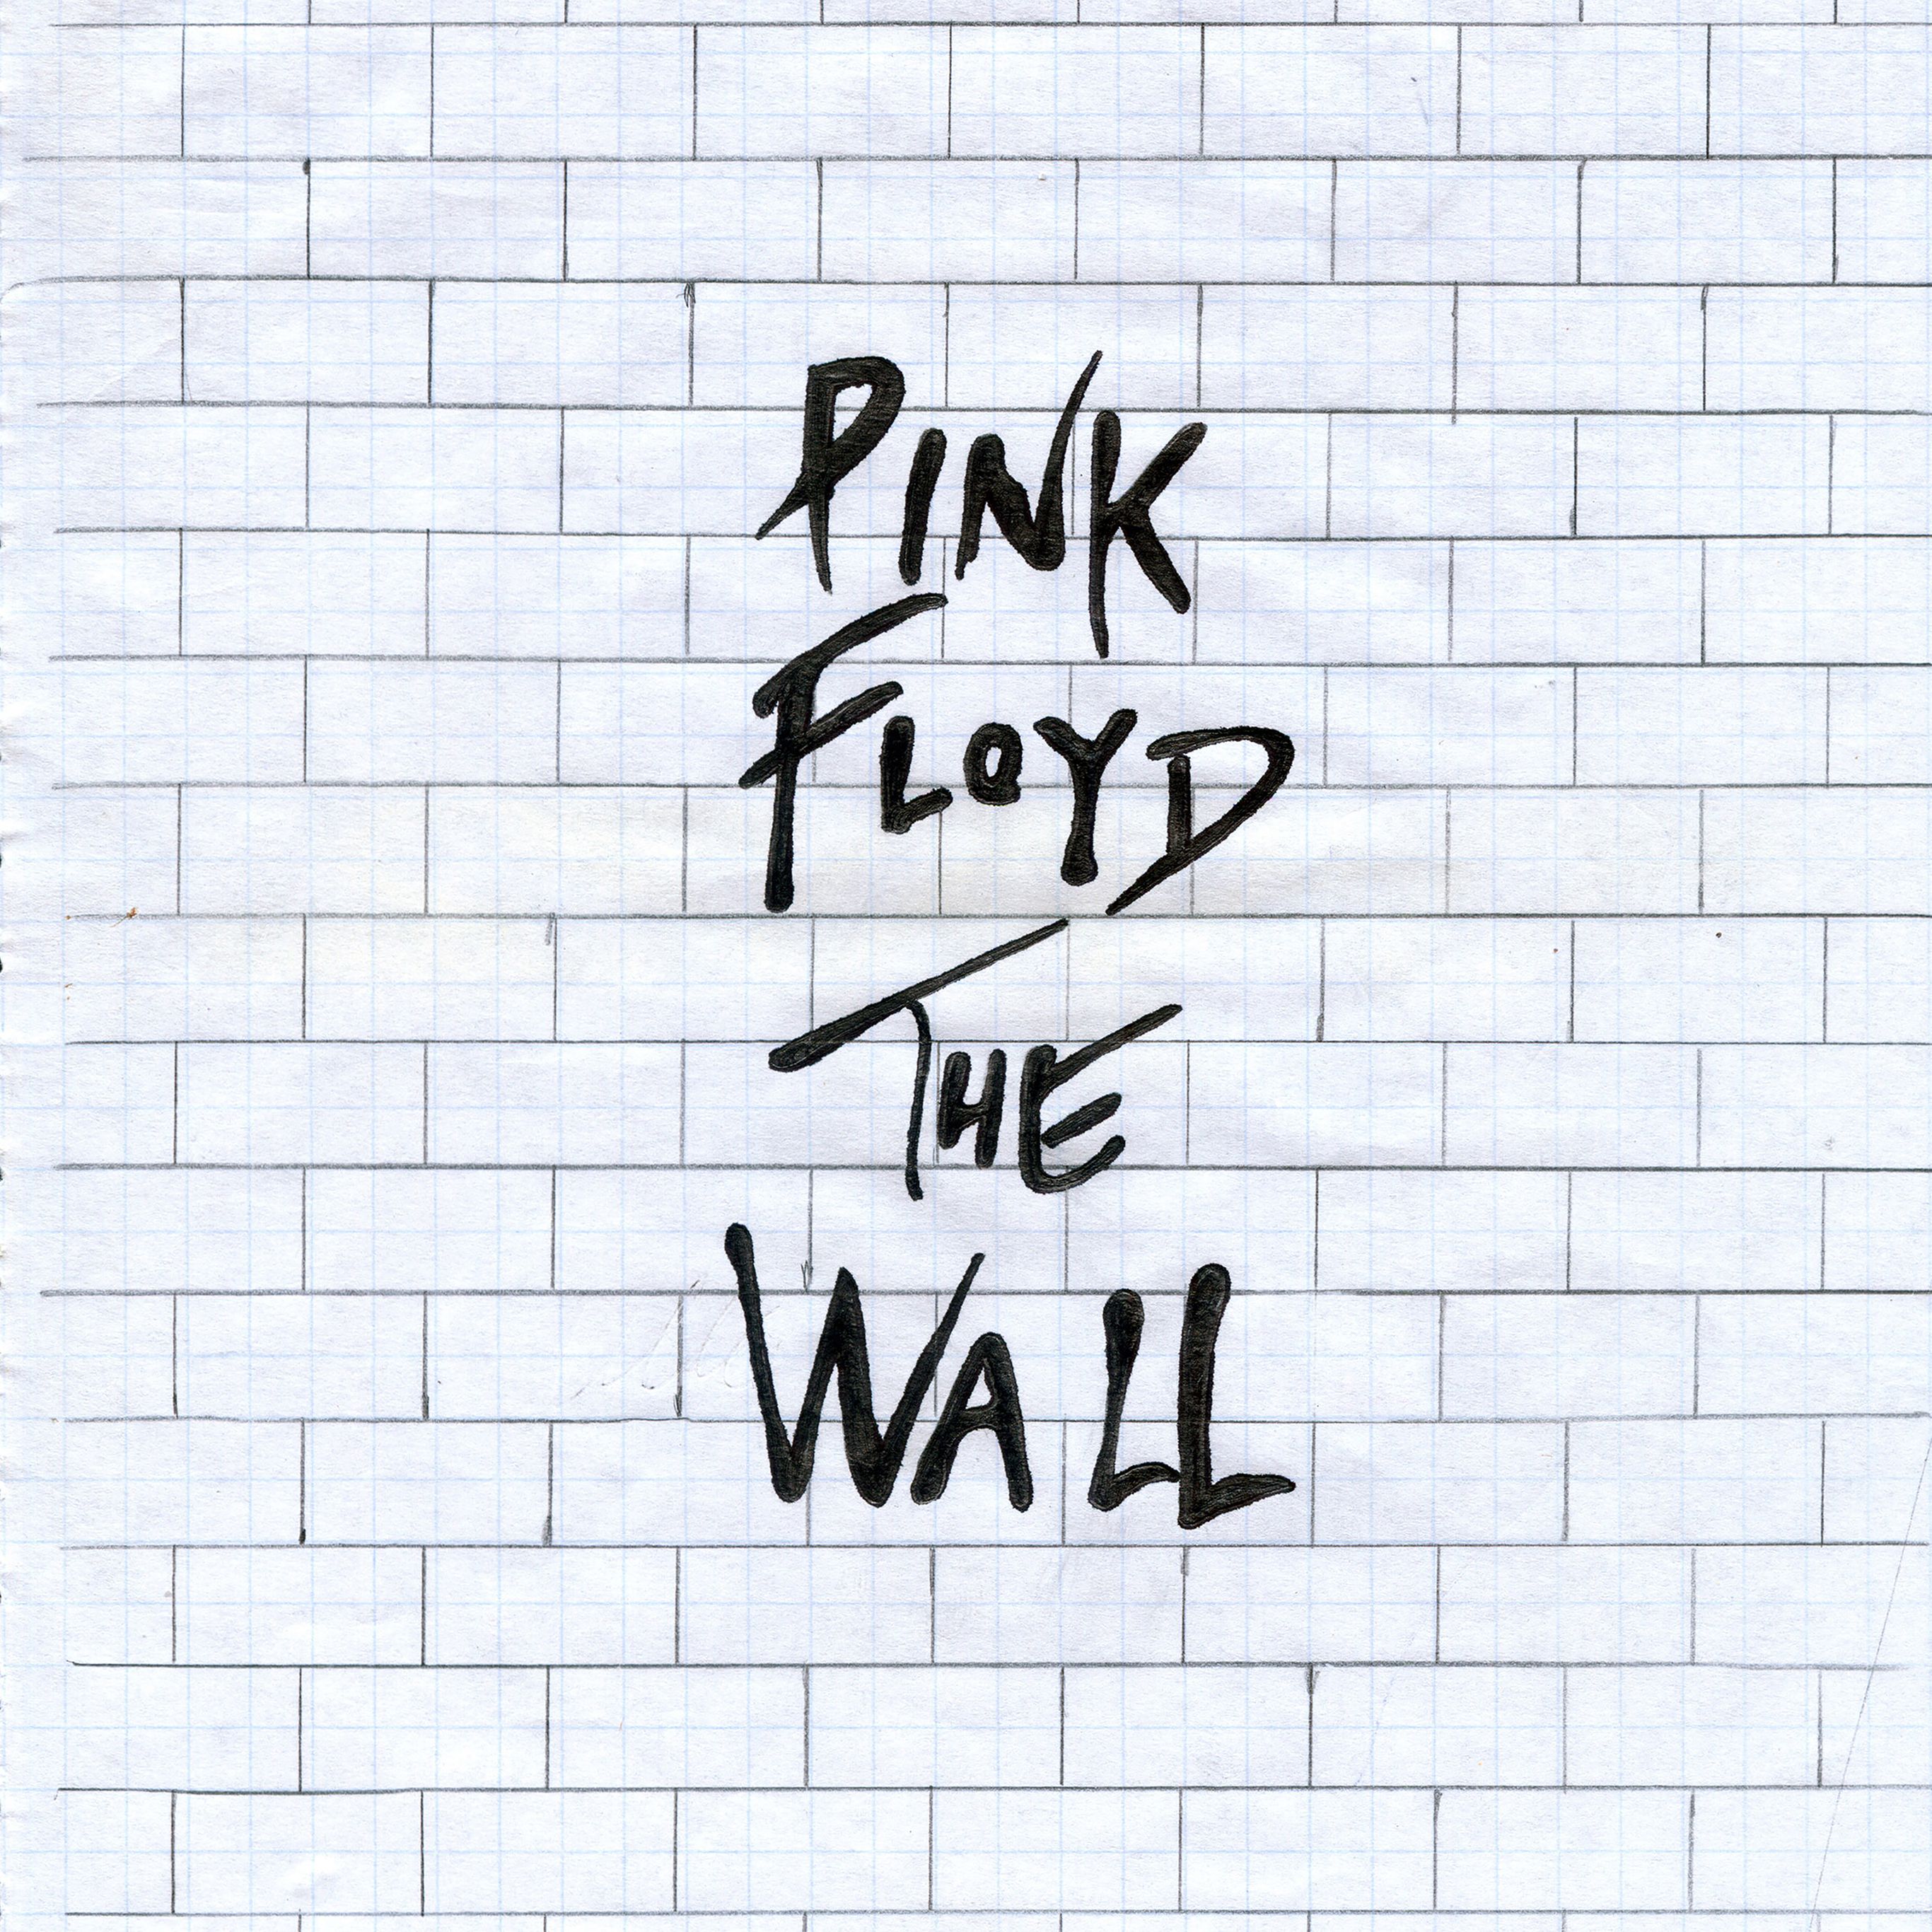 Wallpaper Pink Floyd The Wall Album